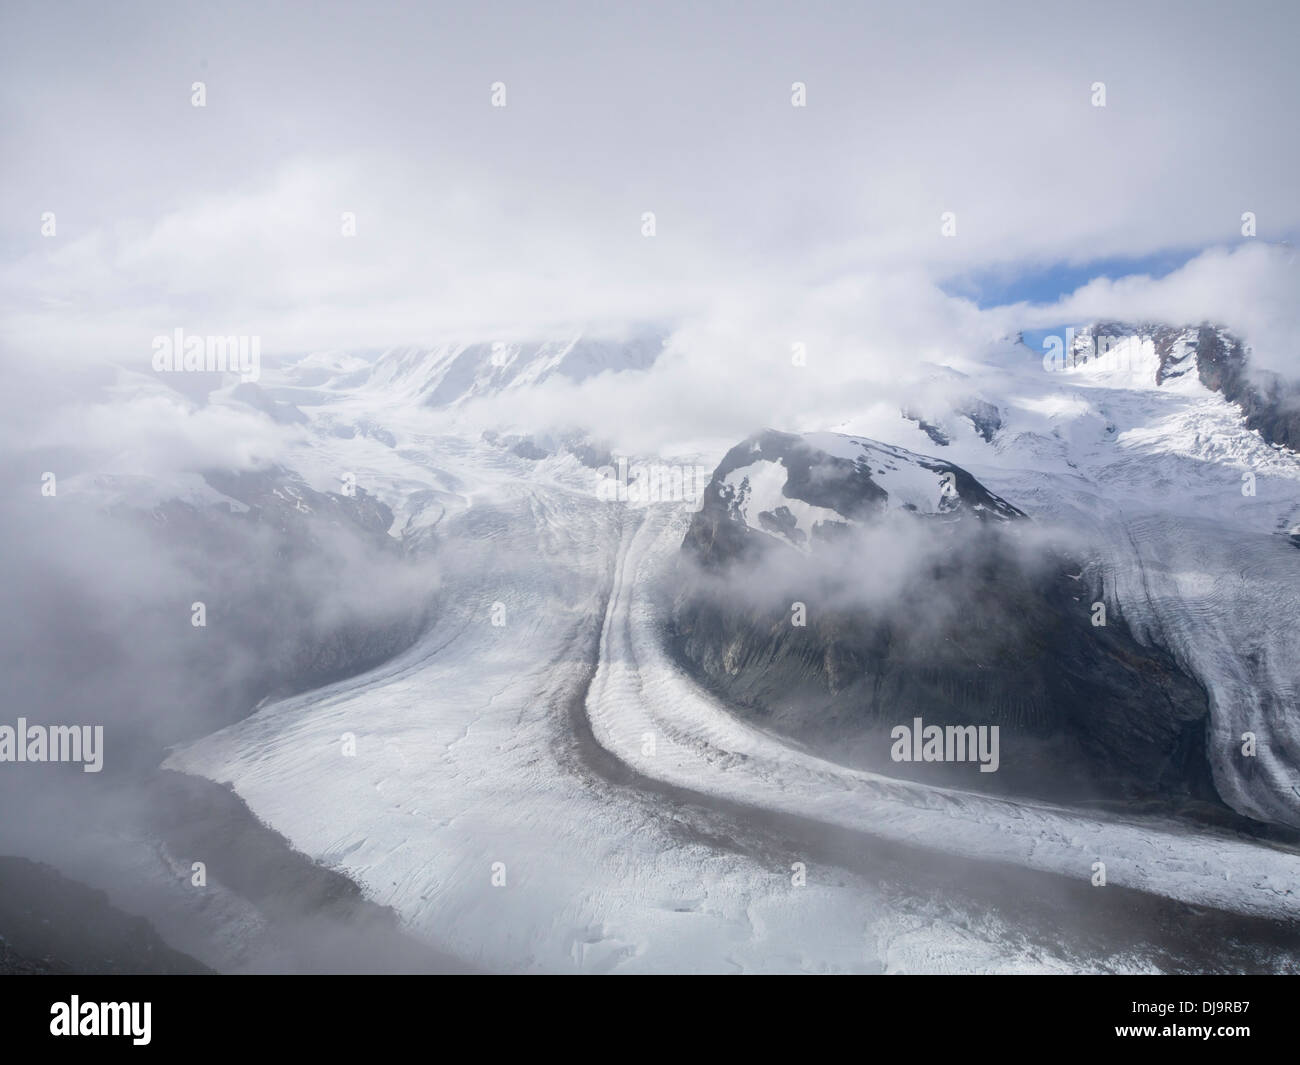 Alpine glaciazioni, Gorner ghiacciaio Gornergletscher, nei pressi di Zermatt in Svizzera, mediale morene sulla superficie ghiacciata Foto Stock